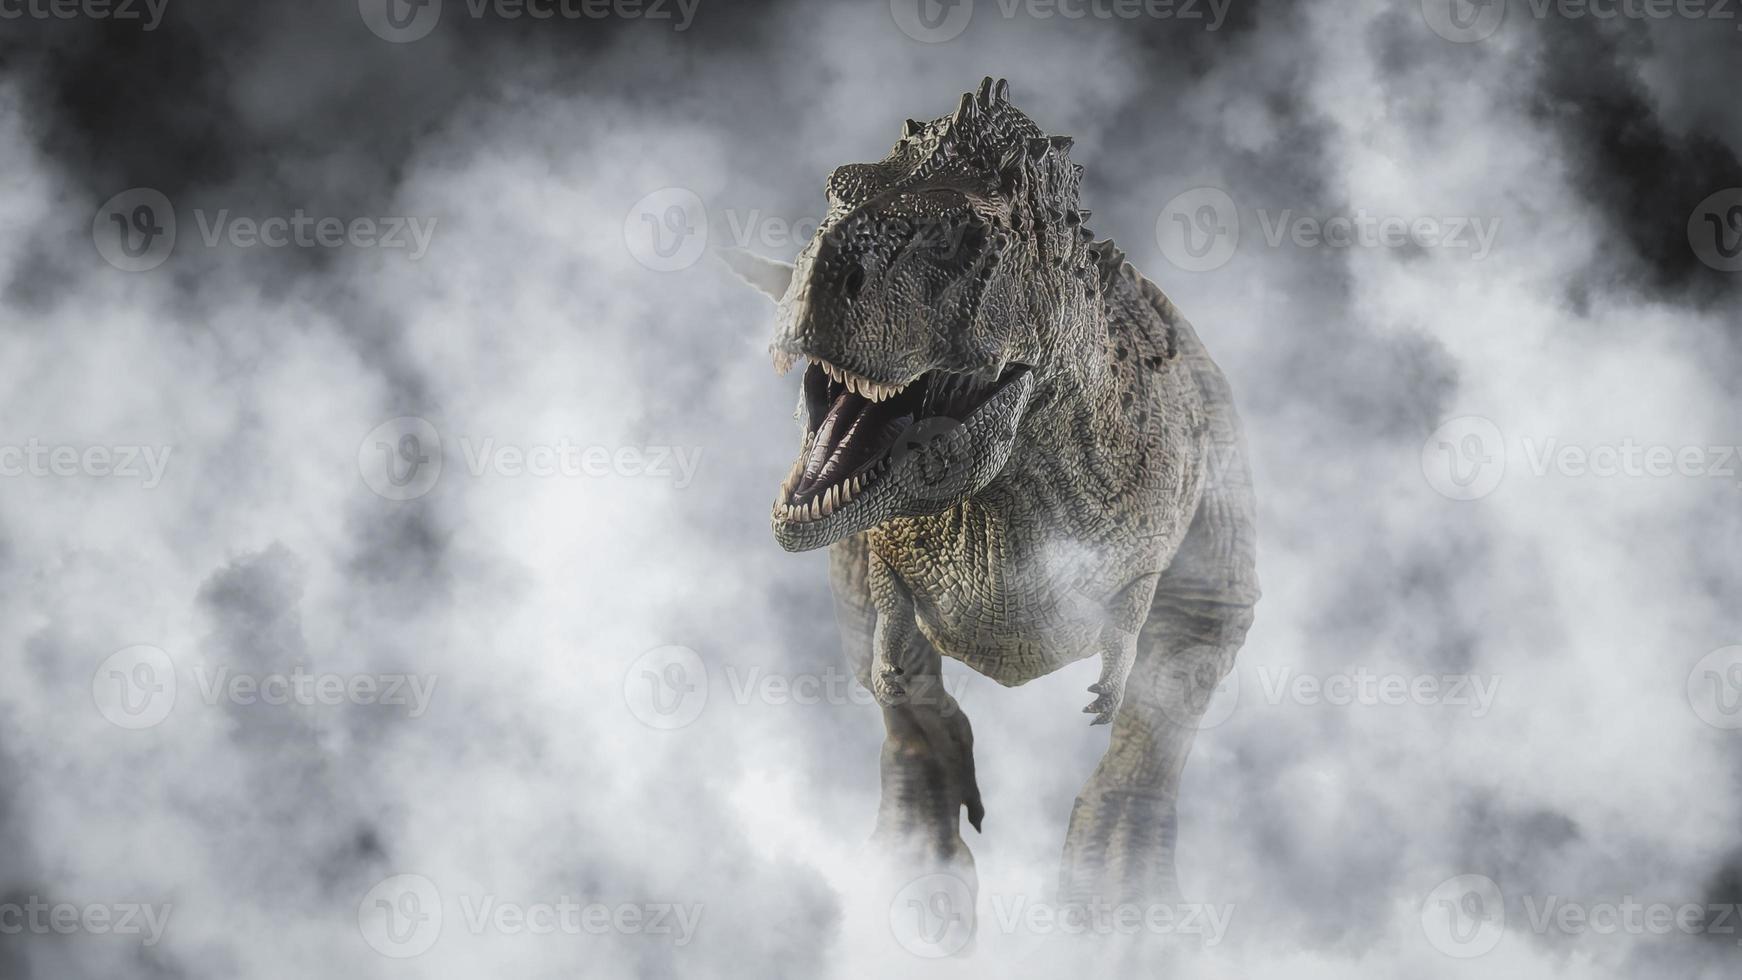 ekrixinatosaurus epitaph dinosaurie på rök bakgrund foto